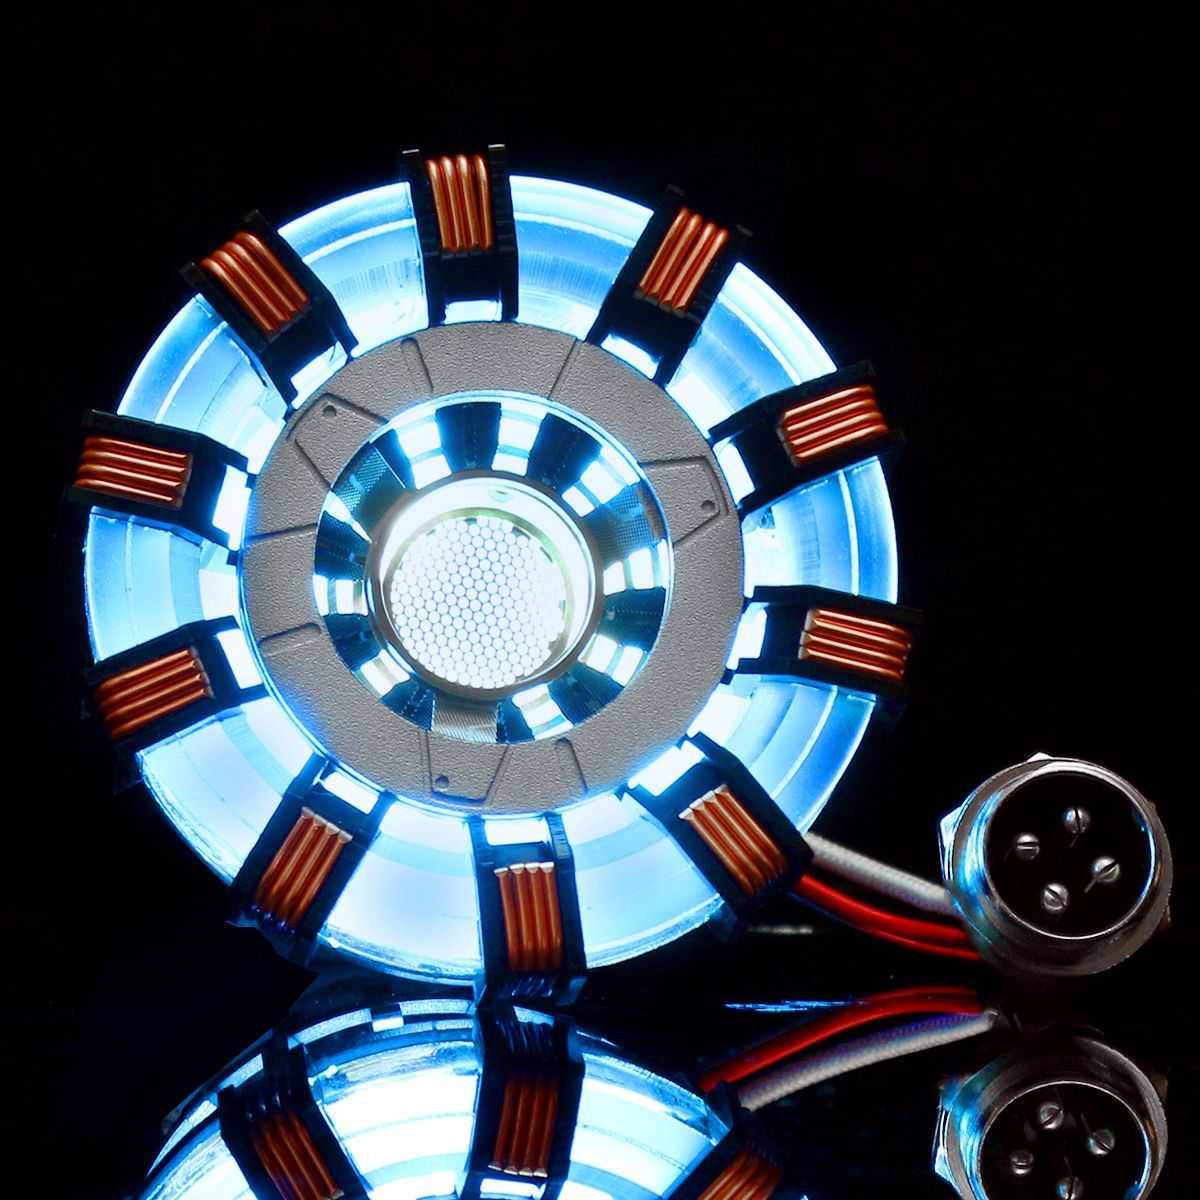 MK2-Acrylic-Tony-ARC-Reactor-Model-DIY-Kit-USB-Chest-Lamp-Movie-Props-Illuminant-LED-Flash-Light-Set-1434467